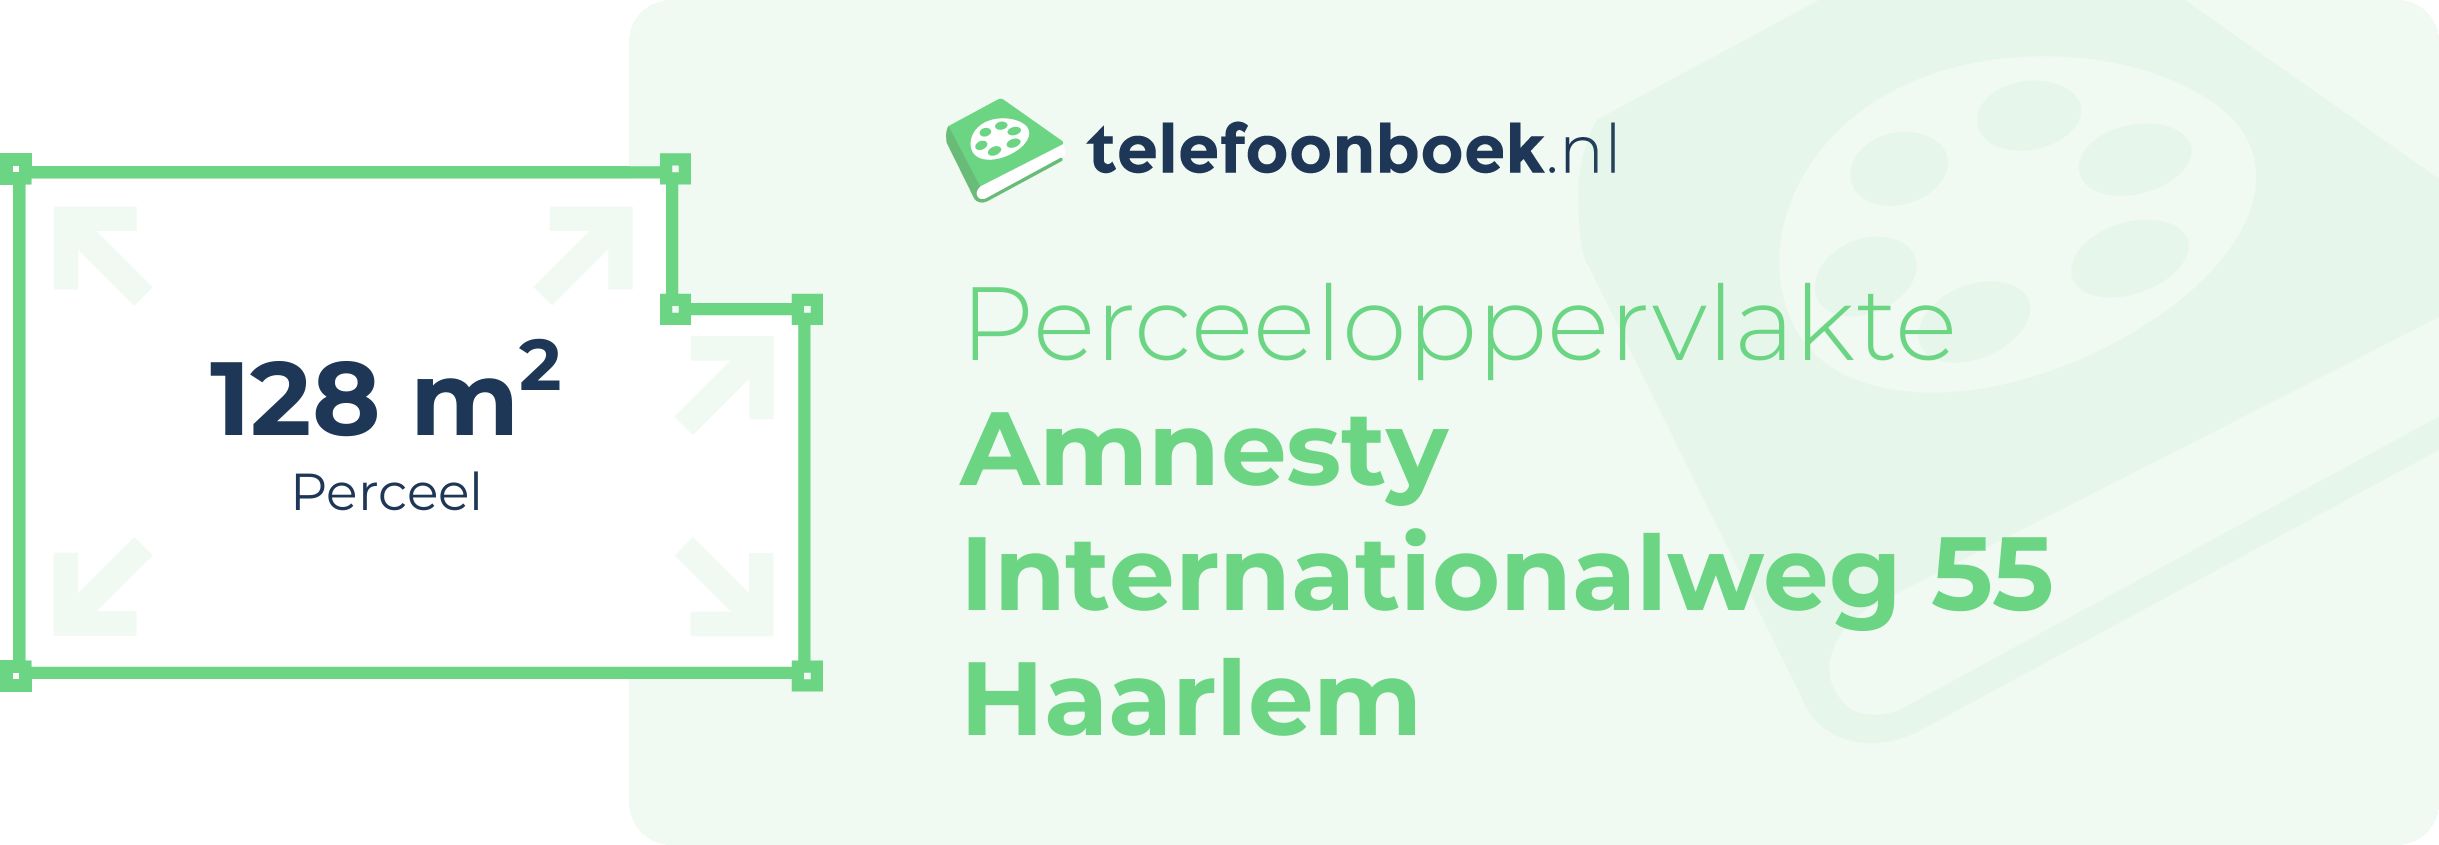 Perceeloppervlakte Amnesty Internationalweg 55 Haarlem